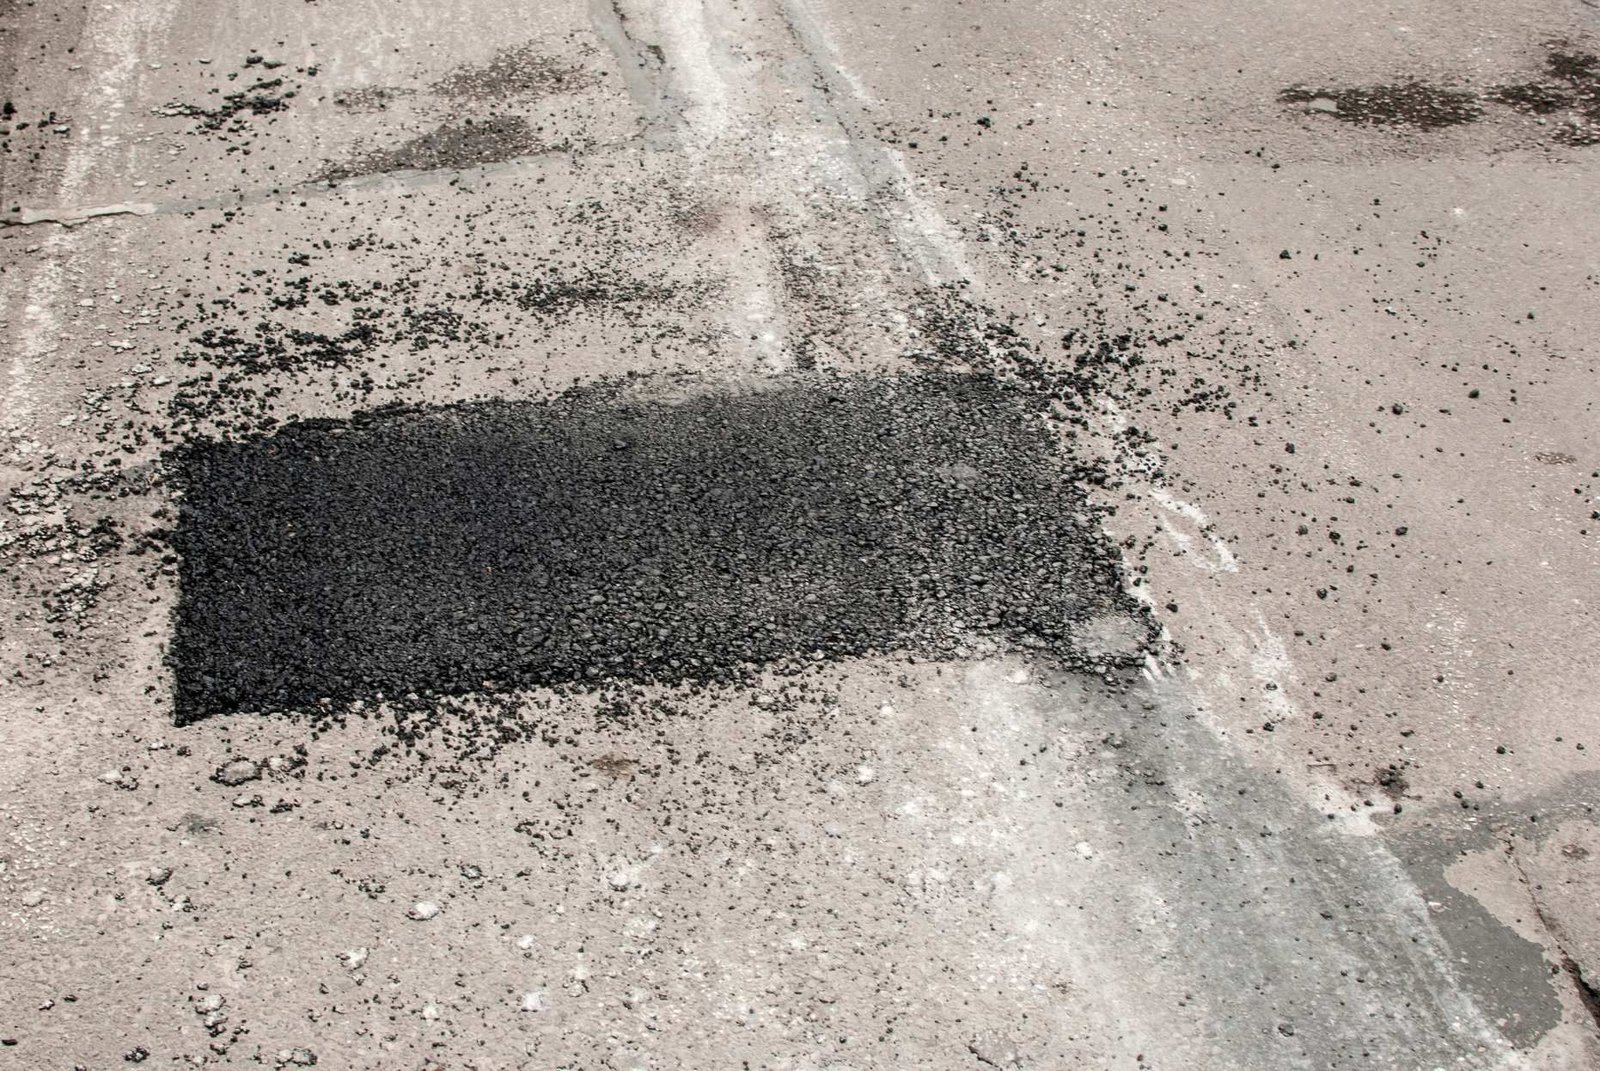 asphalt patching solution done in a cracked asphalt pavement in Naples, FL